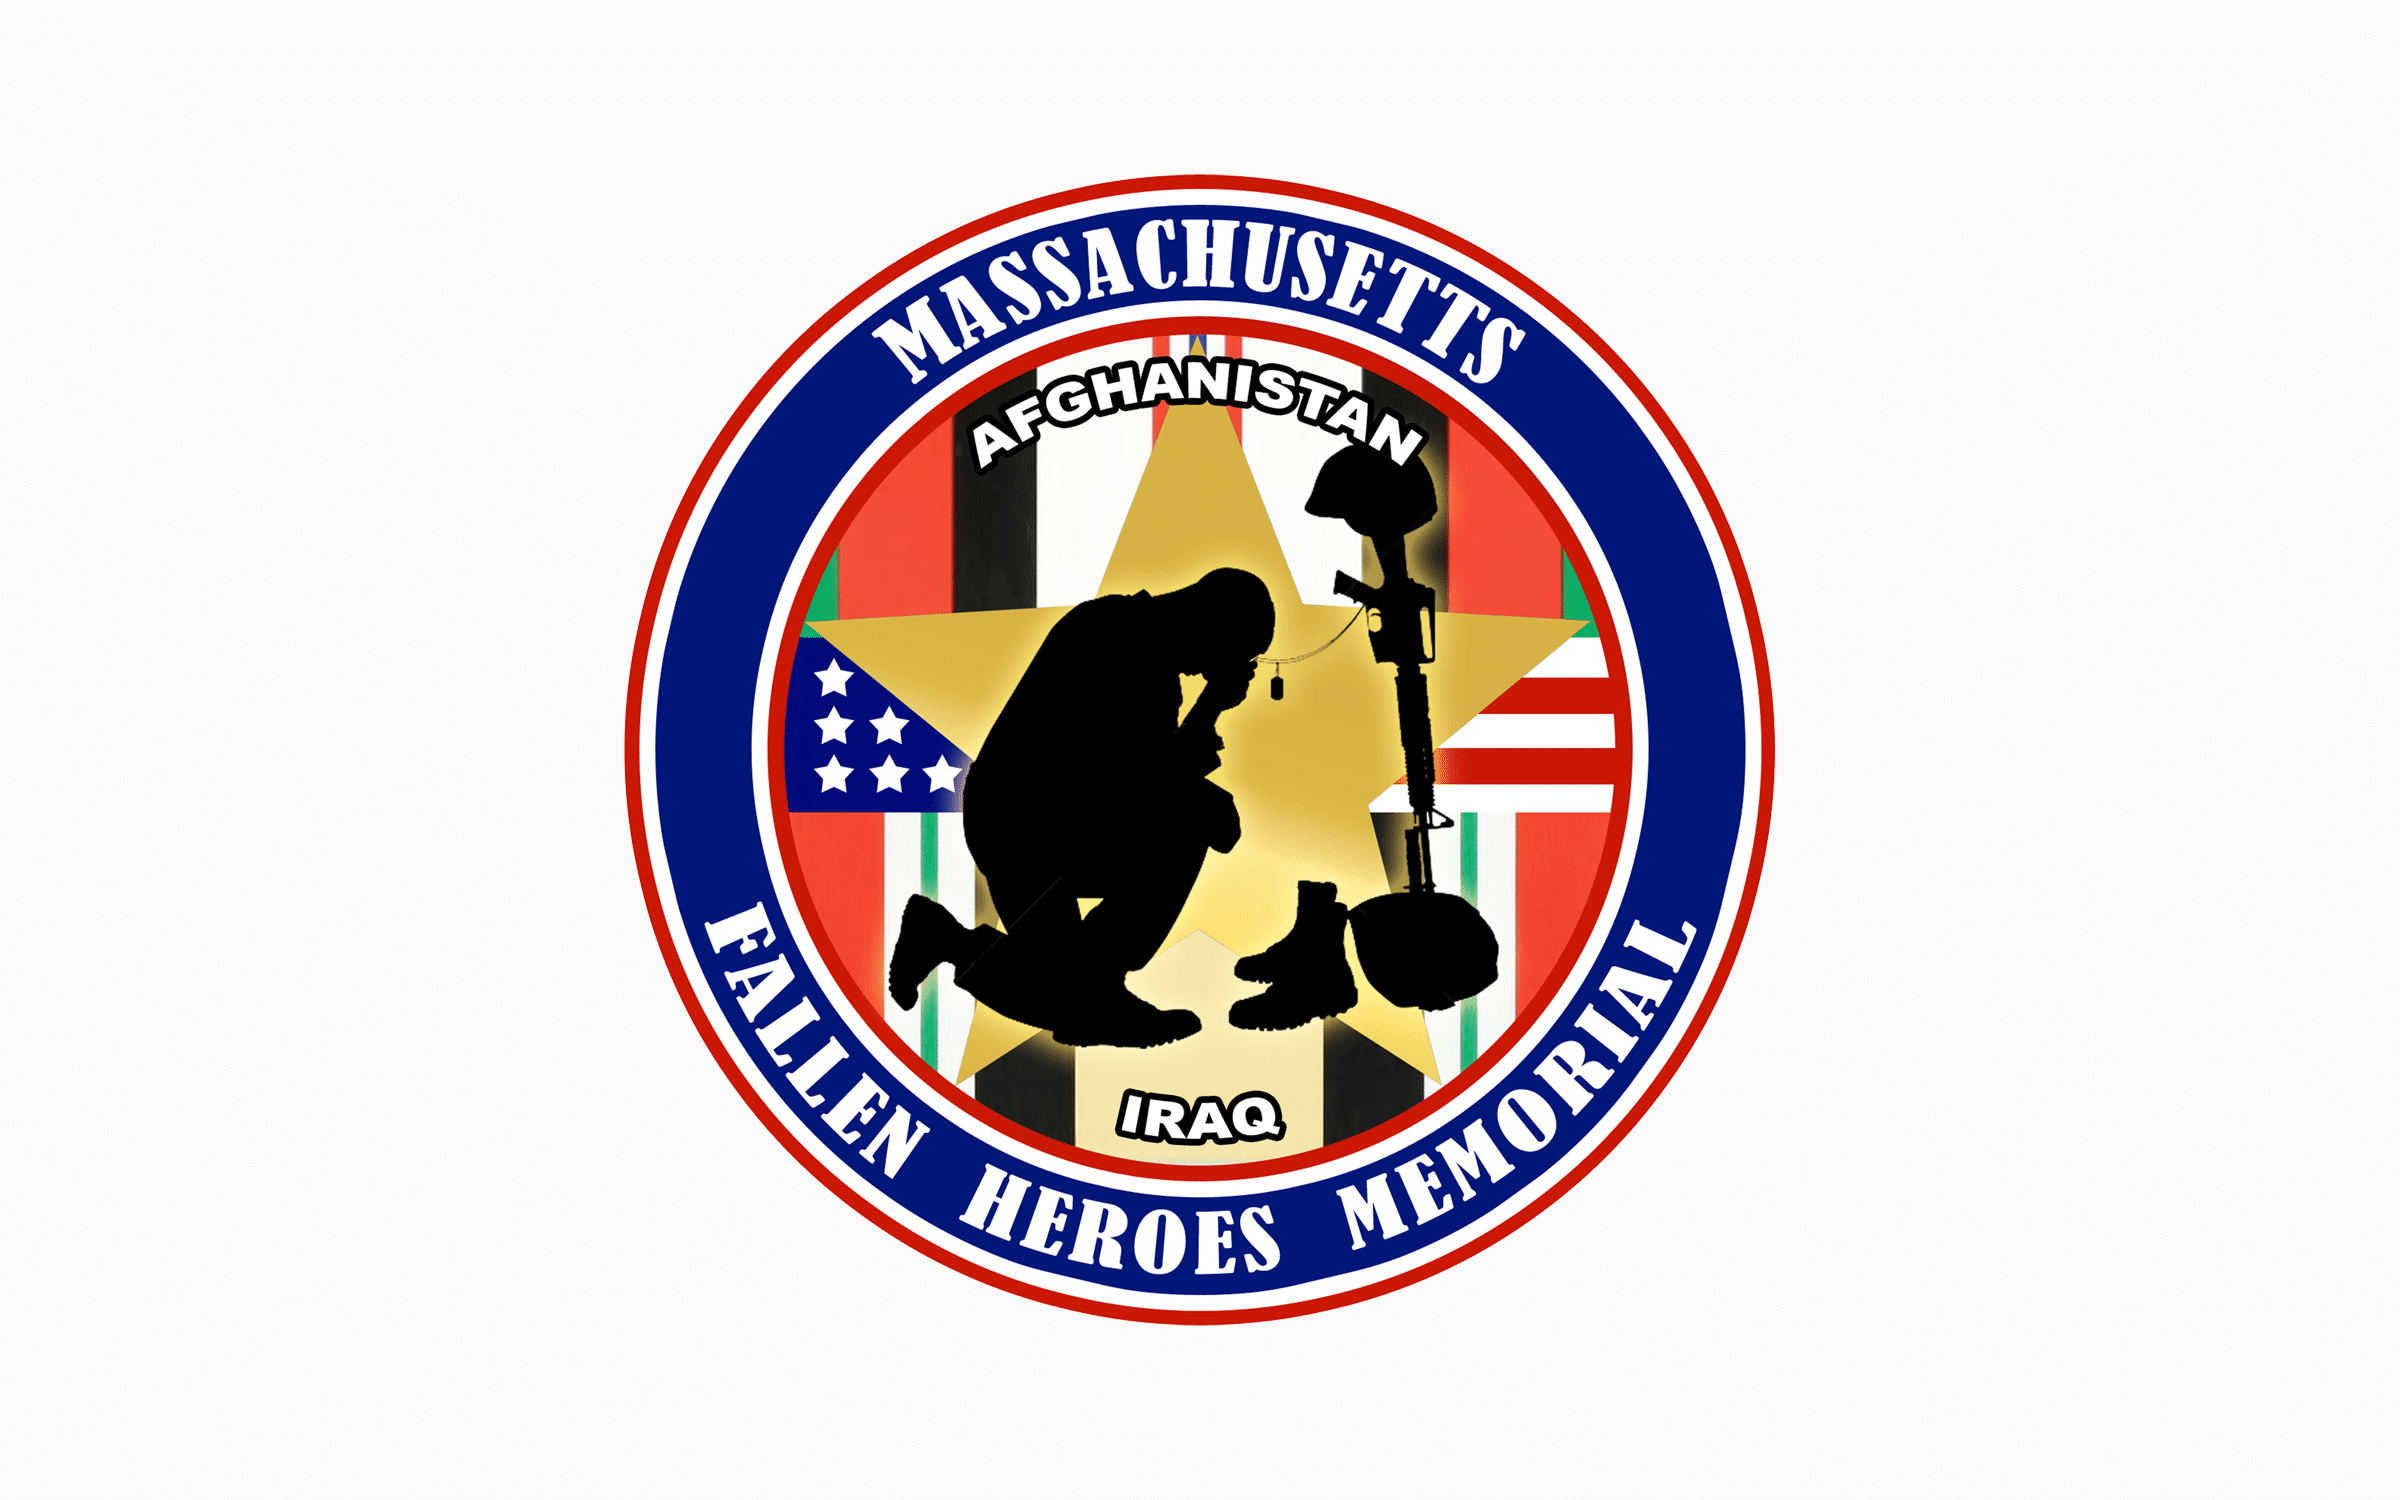 A Memorial to the Massachusetts Fallen Heroes